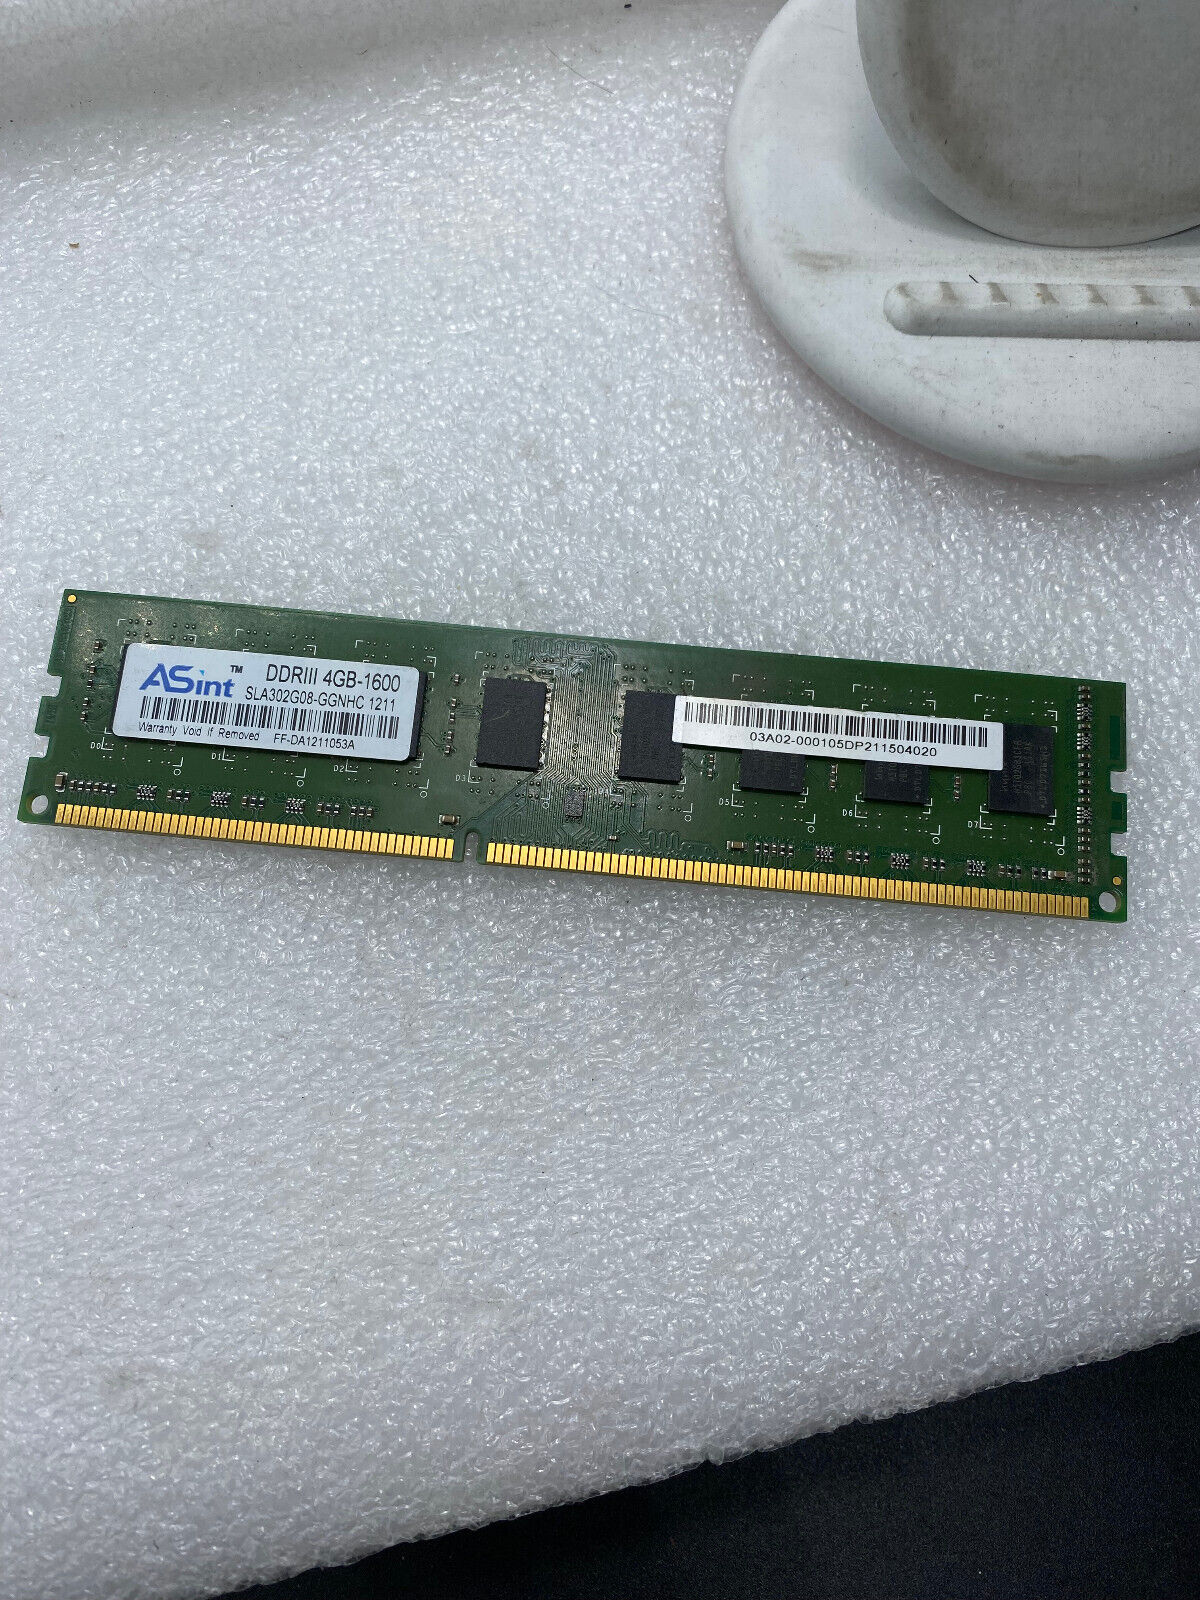 Lot 2x Asint 4Gb 1600 DDR3 Ram SLA302G08-GGNG Total = 8GB